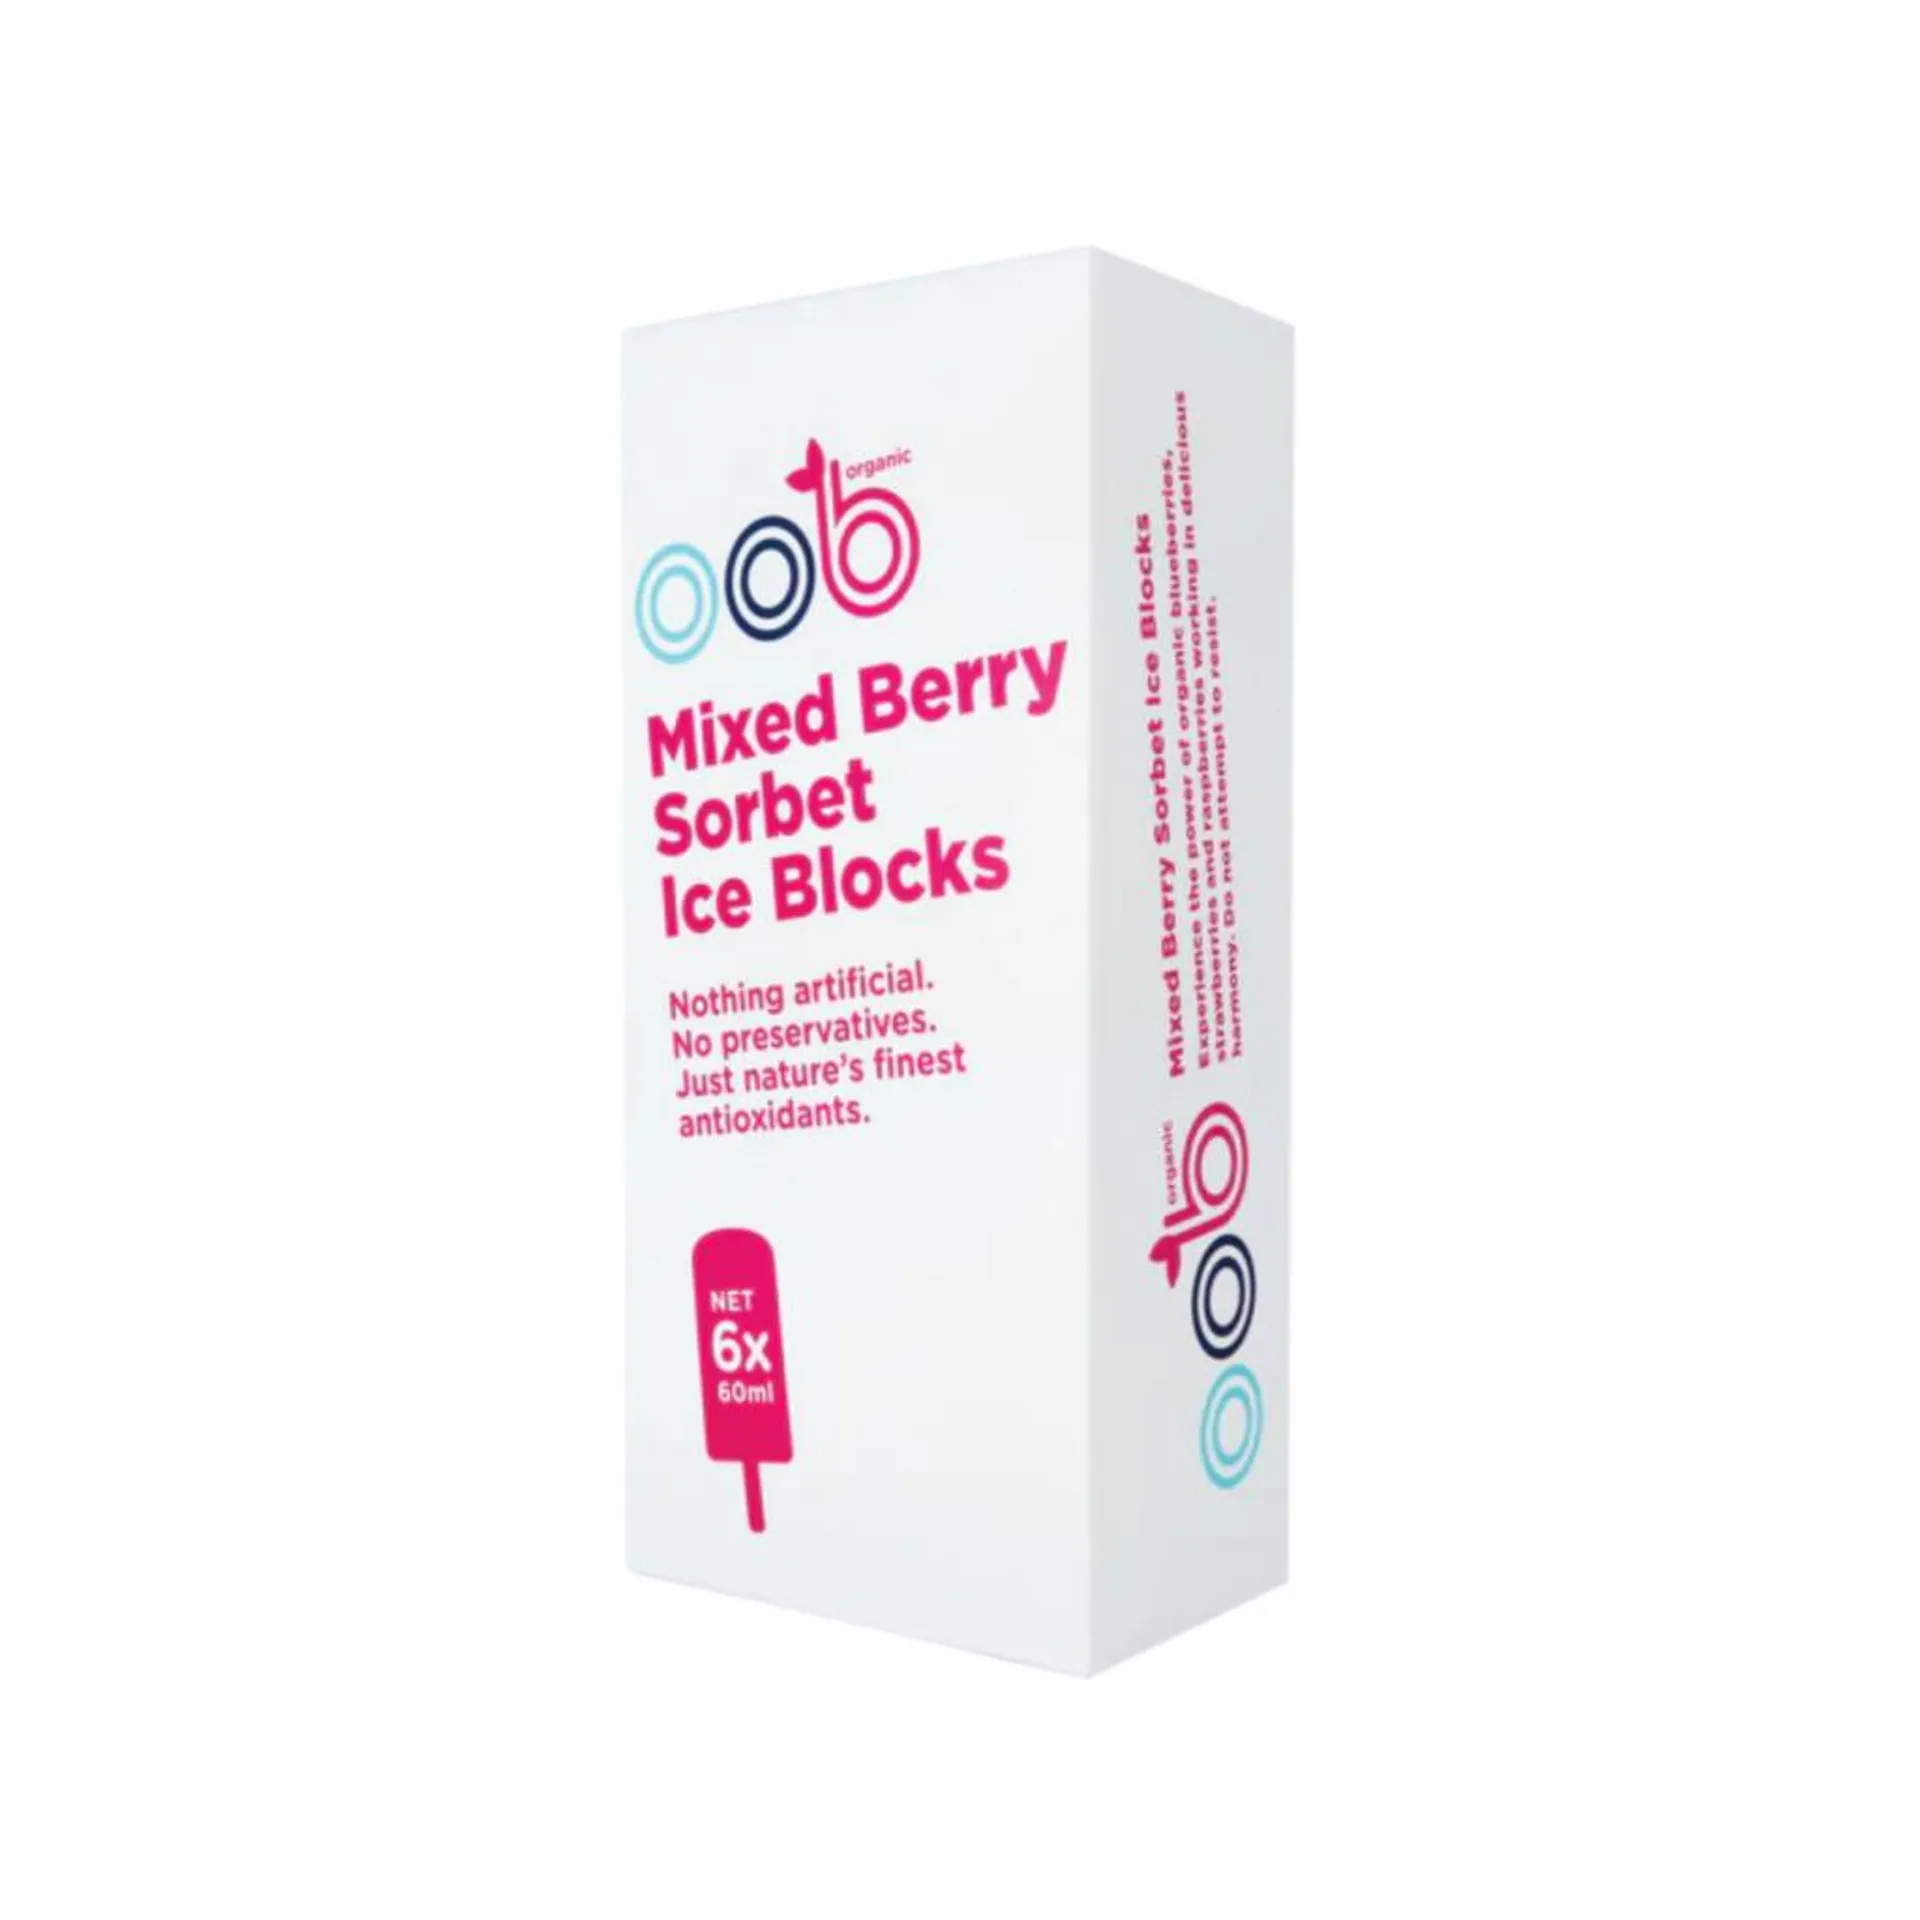 OOB Organic Iceblock Mixed Berry 6Pk